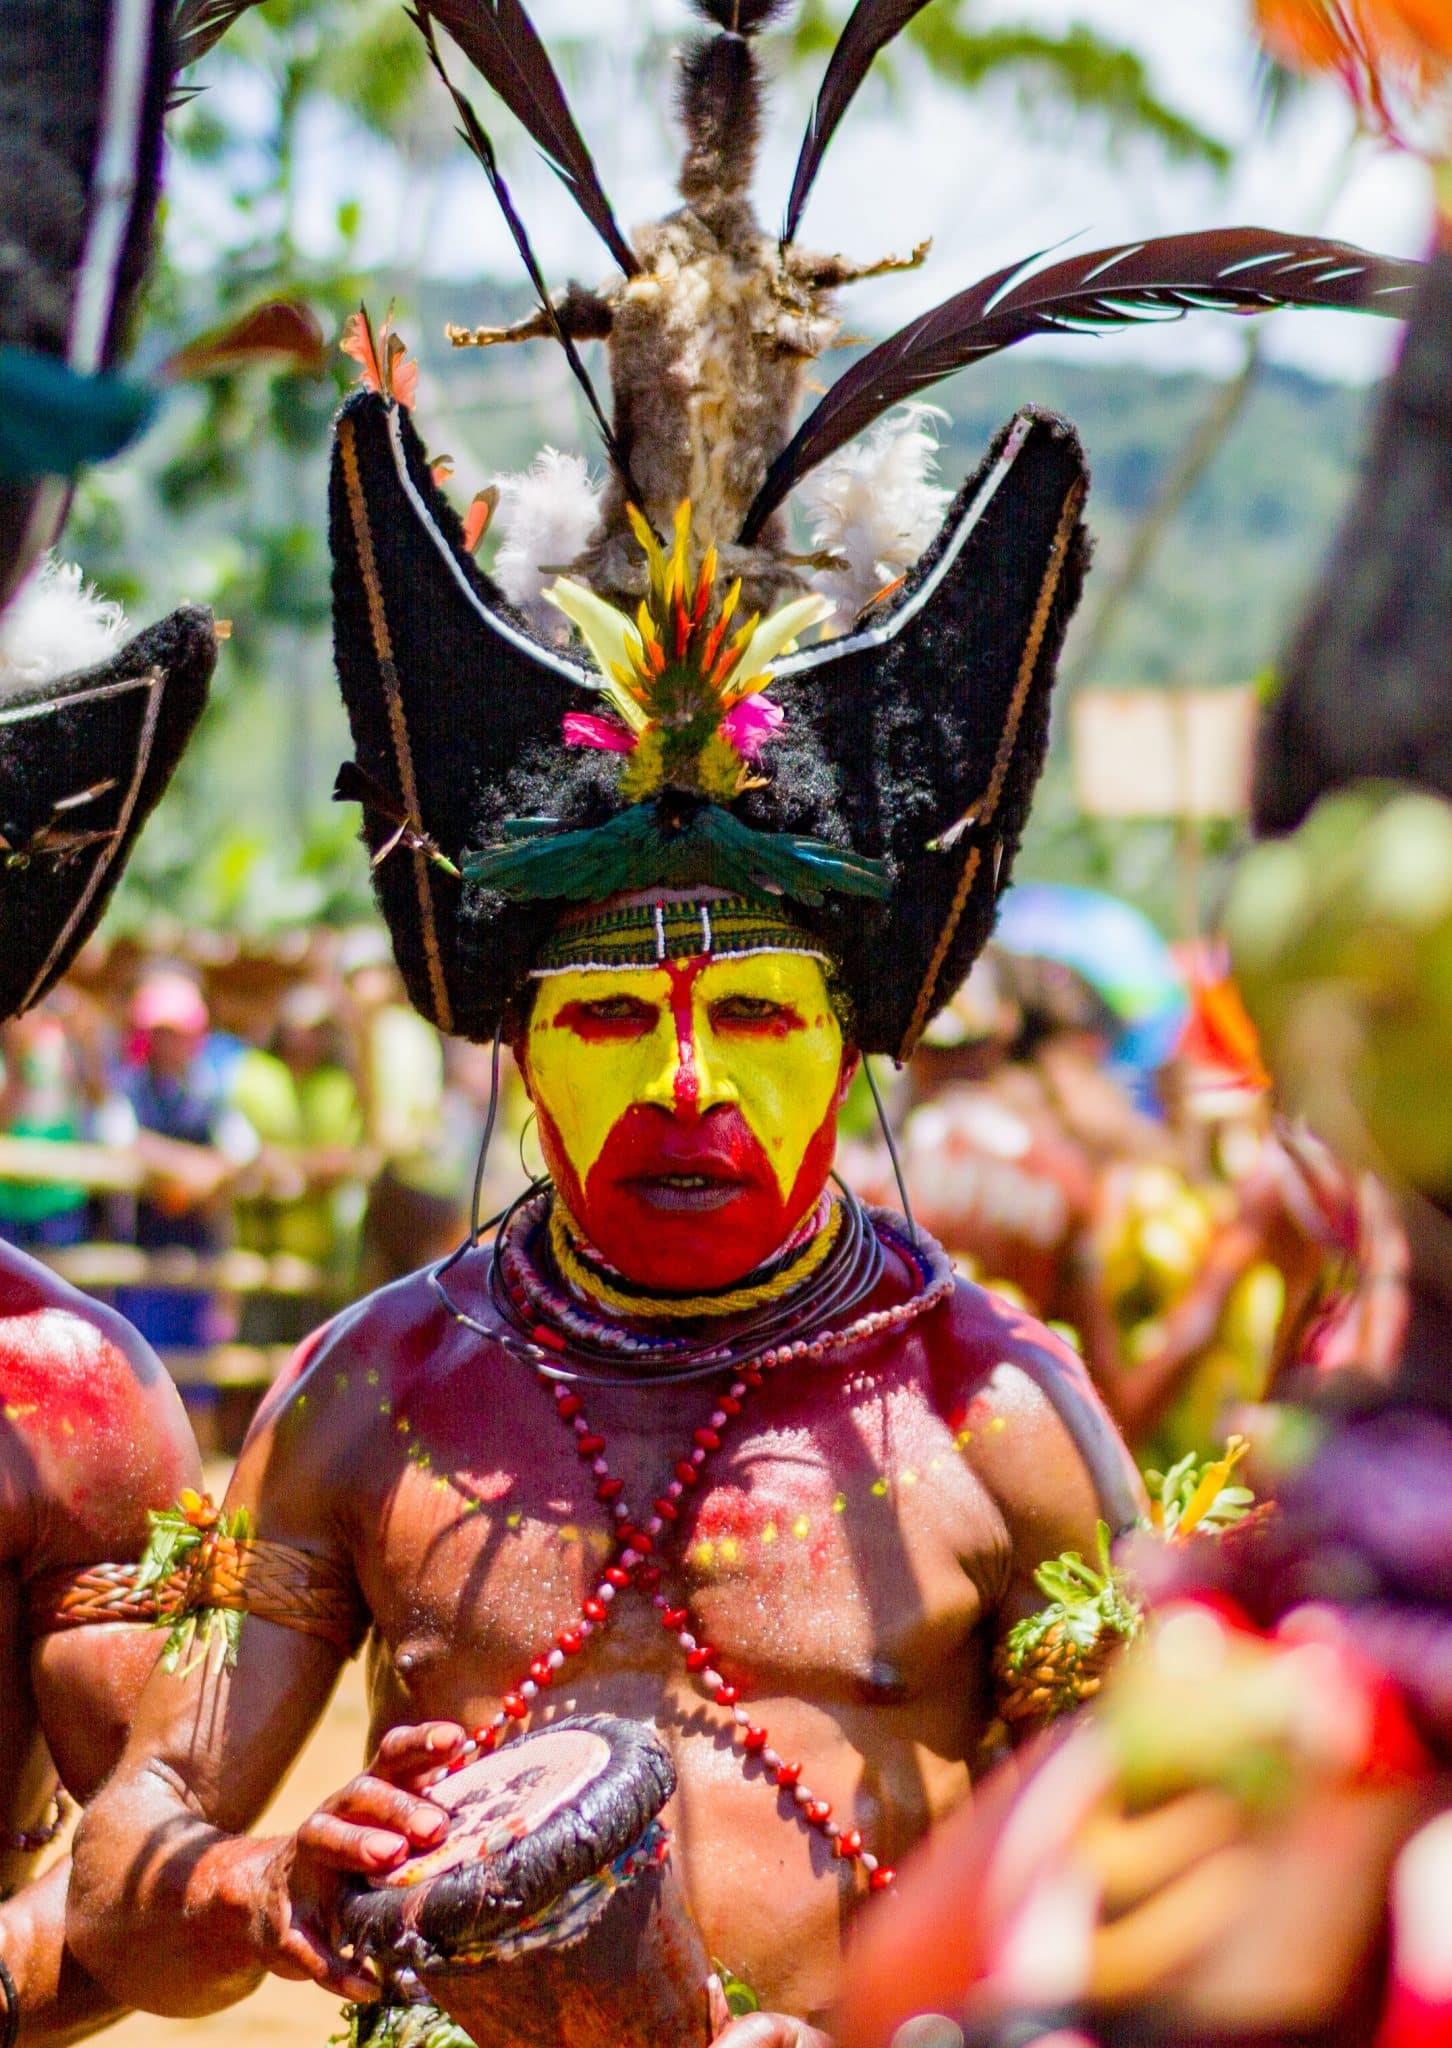 Photo of Papau New Guinea Man in headress by Jordan Donaldson for Unsplash